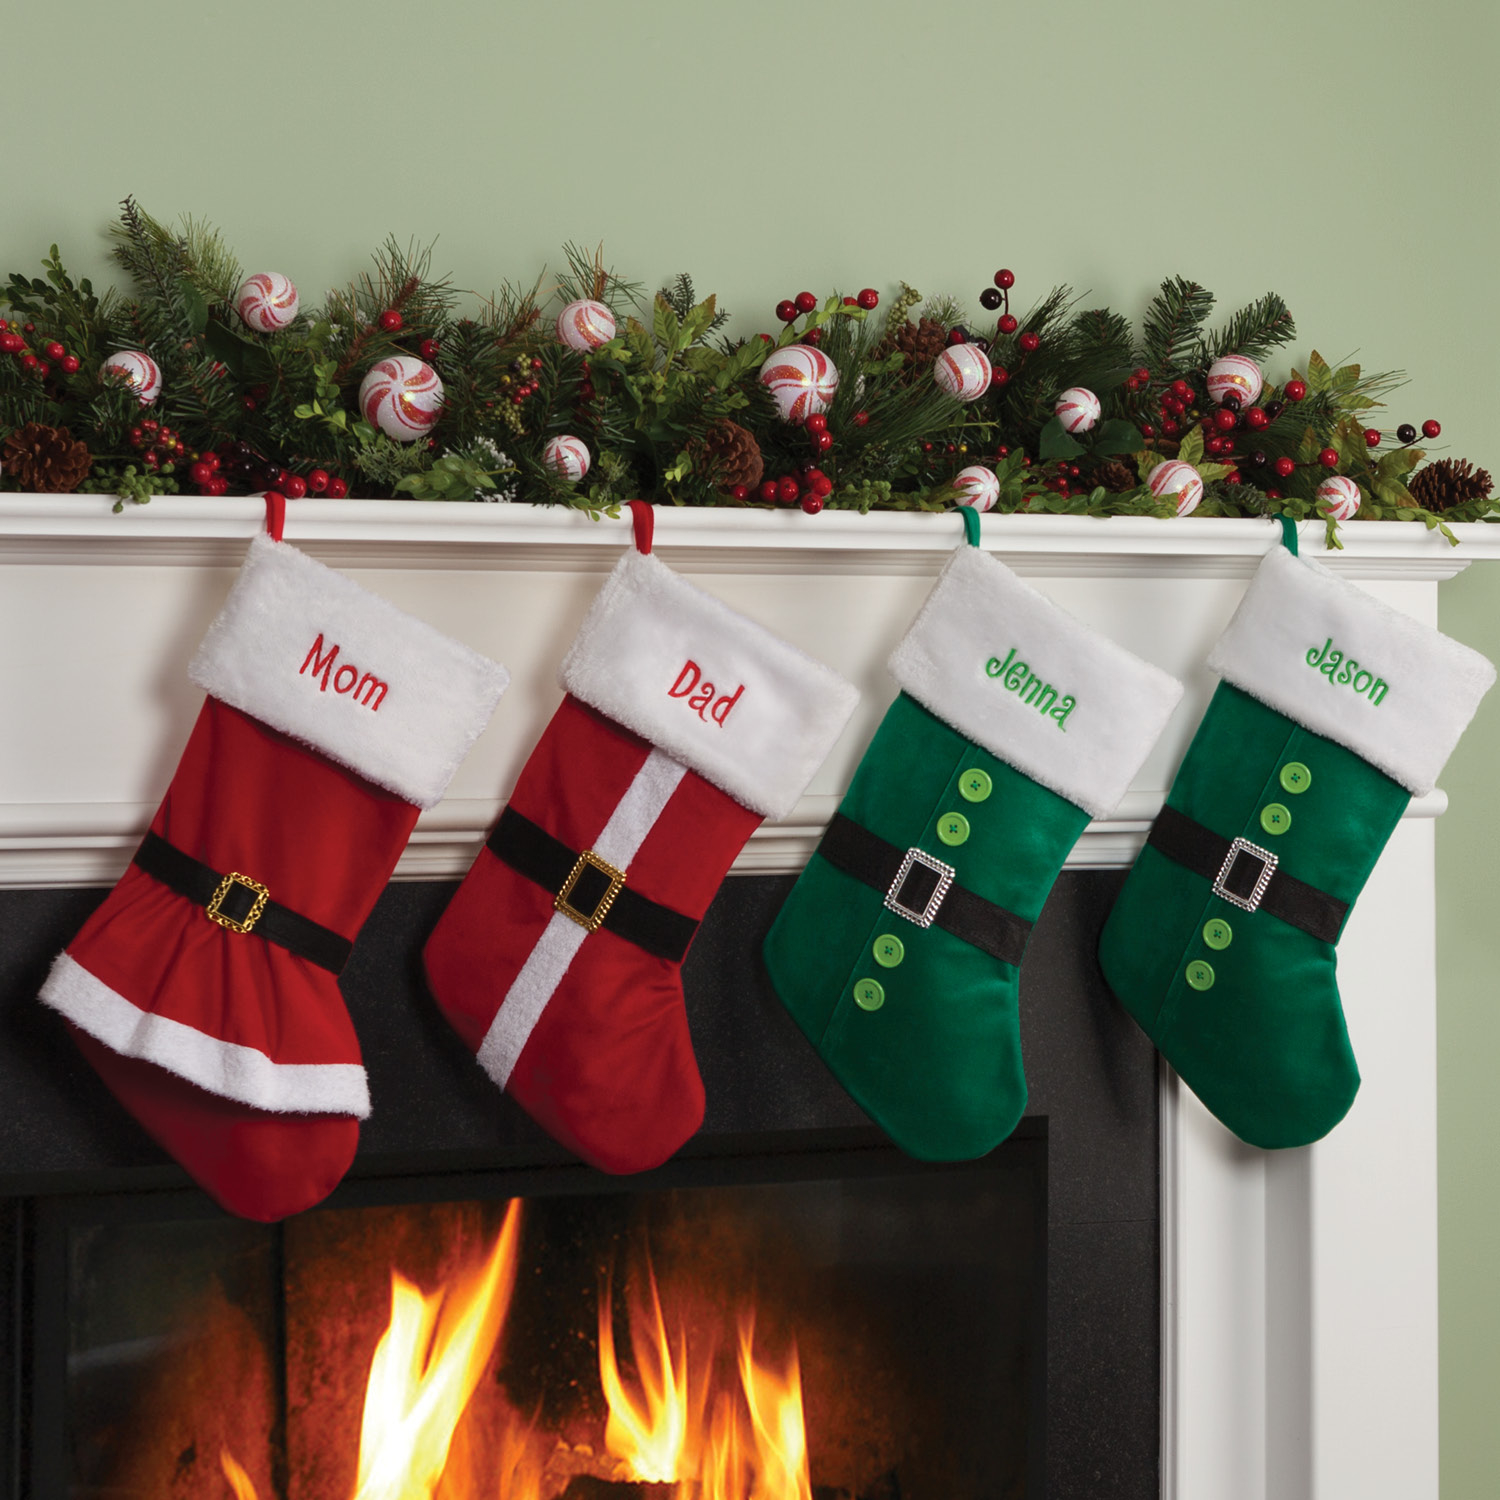 Christmas stockings hanging up